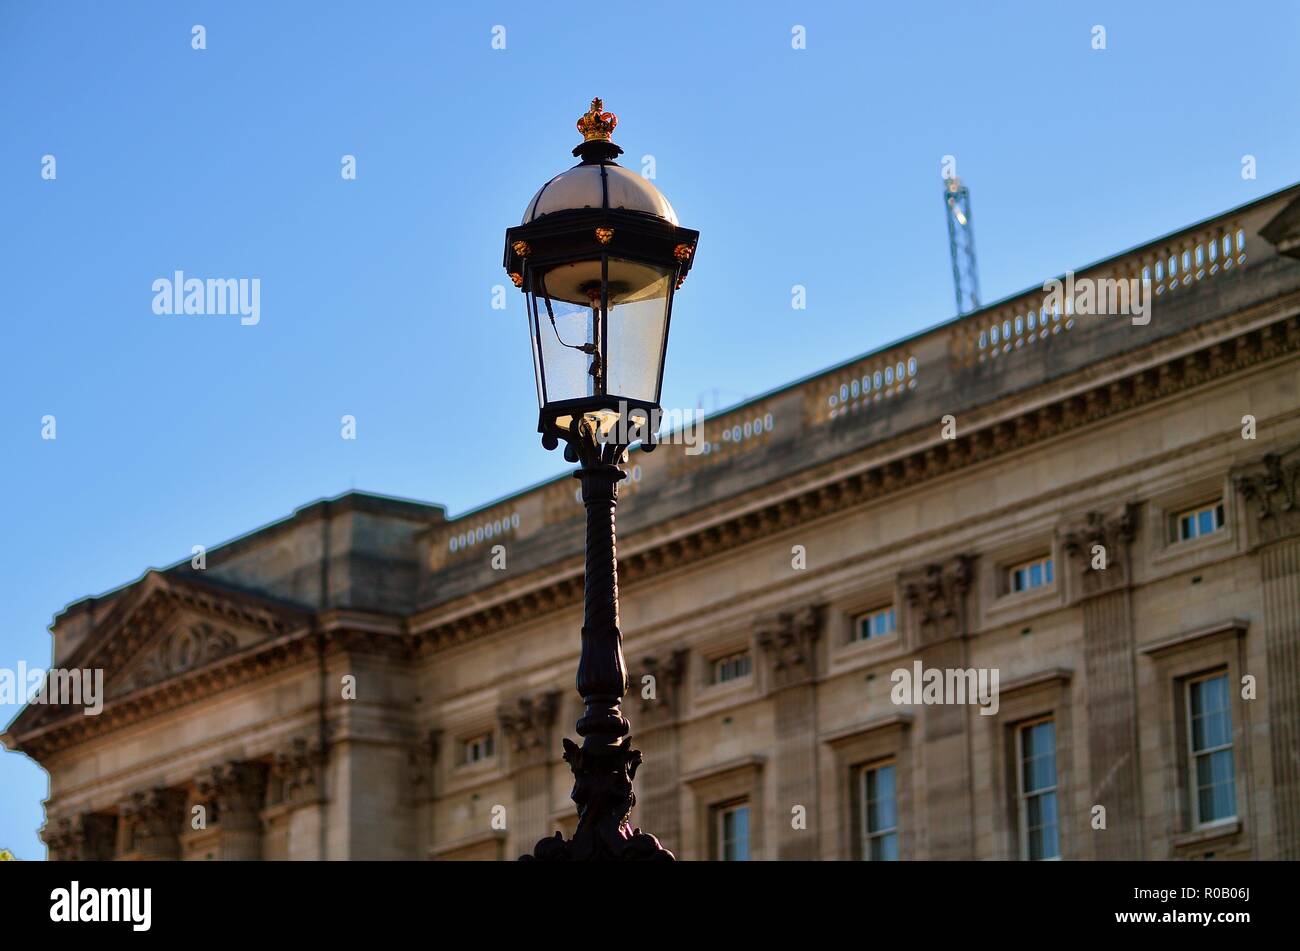 Londres, Inglaterra, Reino Unido. Una viejísima Coach light en frente del Palacio de Buckingham, la famosa residencia de la Reina de Inglaterra. Foto de stock